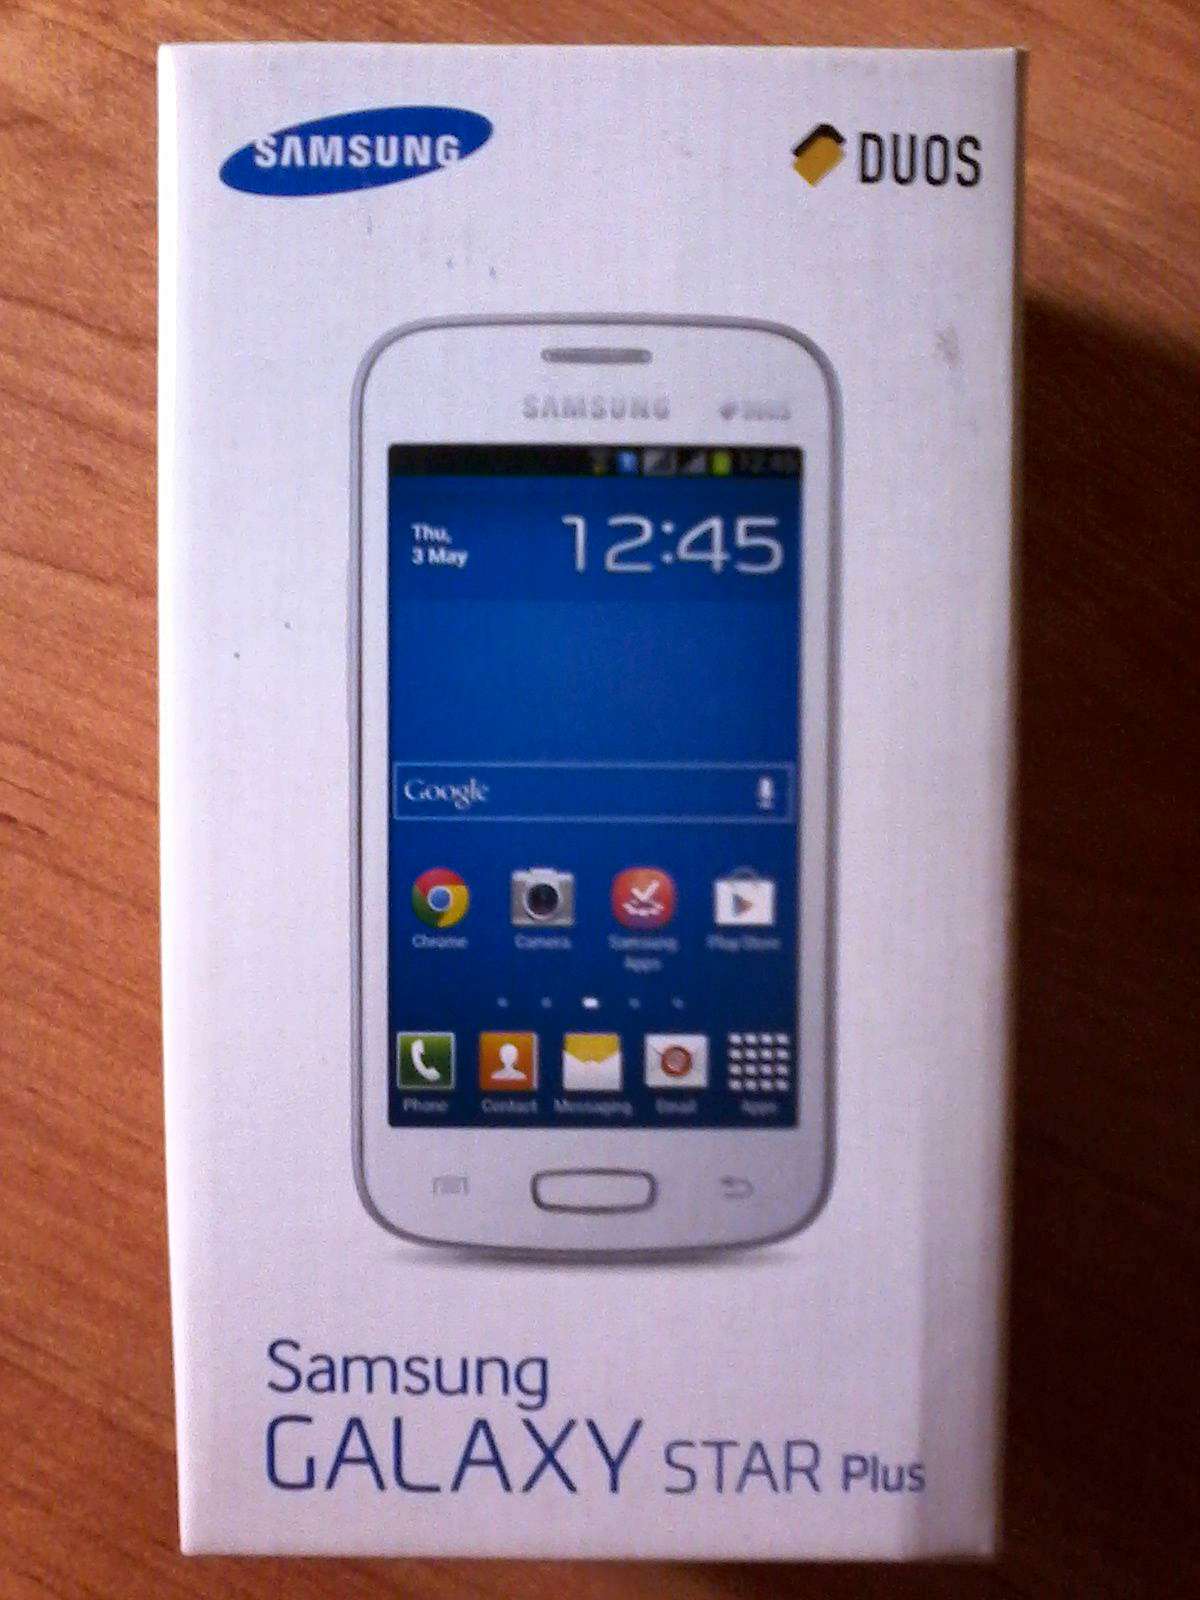 Samsung star plus. Samsung Galaxy gt-s7262. Samsung Galaxy Star Plus s7262. Самсунг галакси Стар плюс gt-s7262. Samsung Galaxy gt 7262.